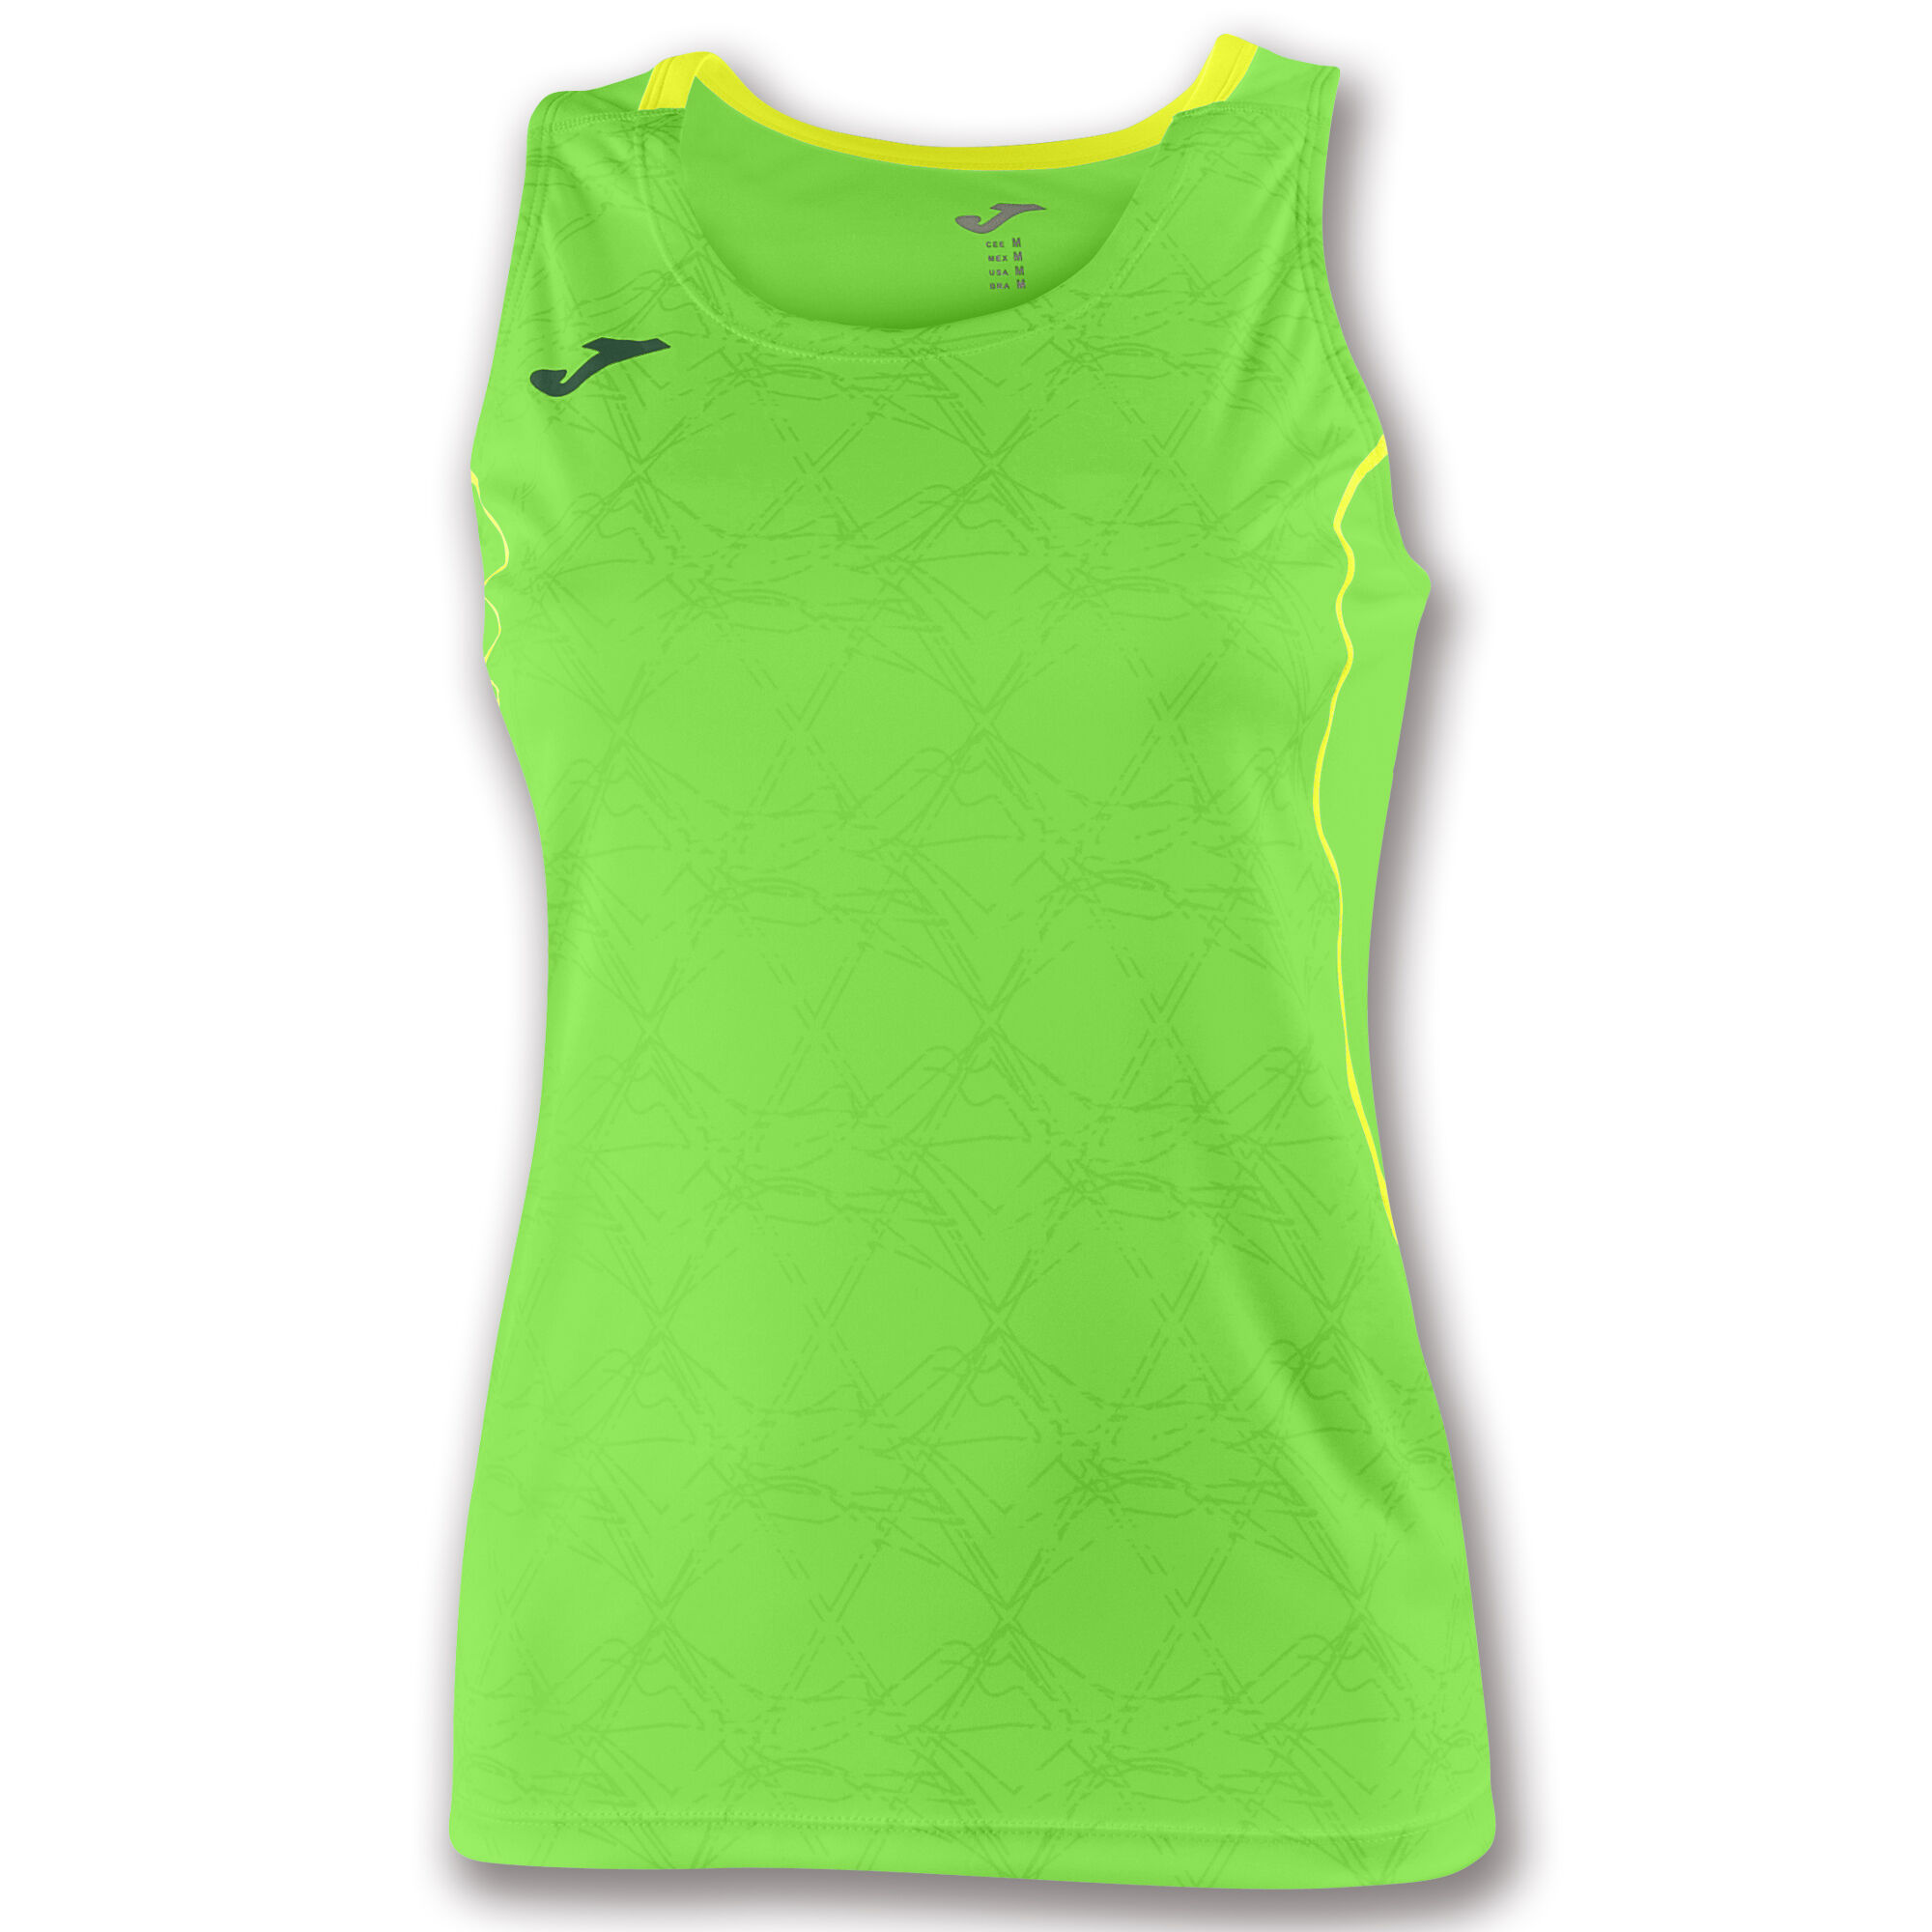 Camiseta sin mangas mujer Olimpia verde flúor